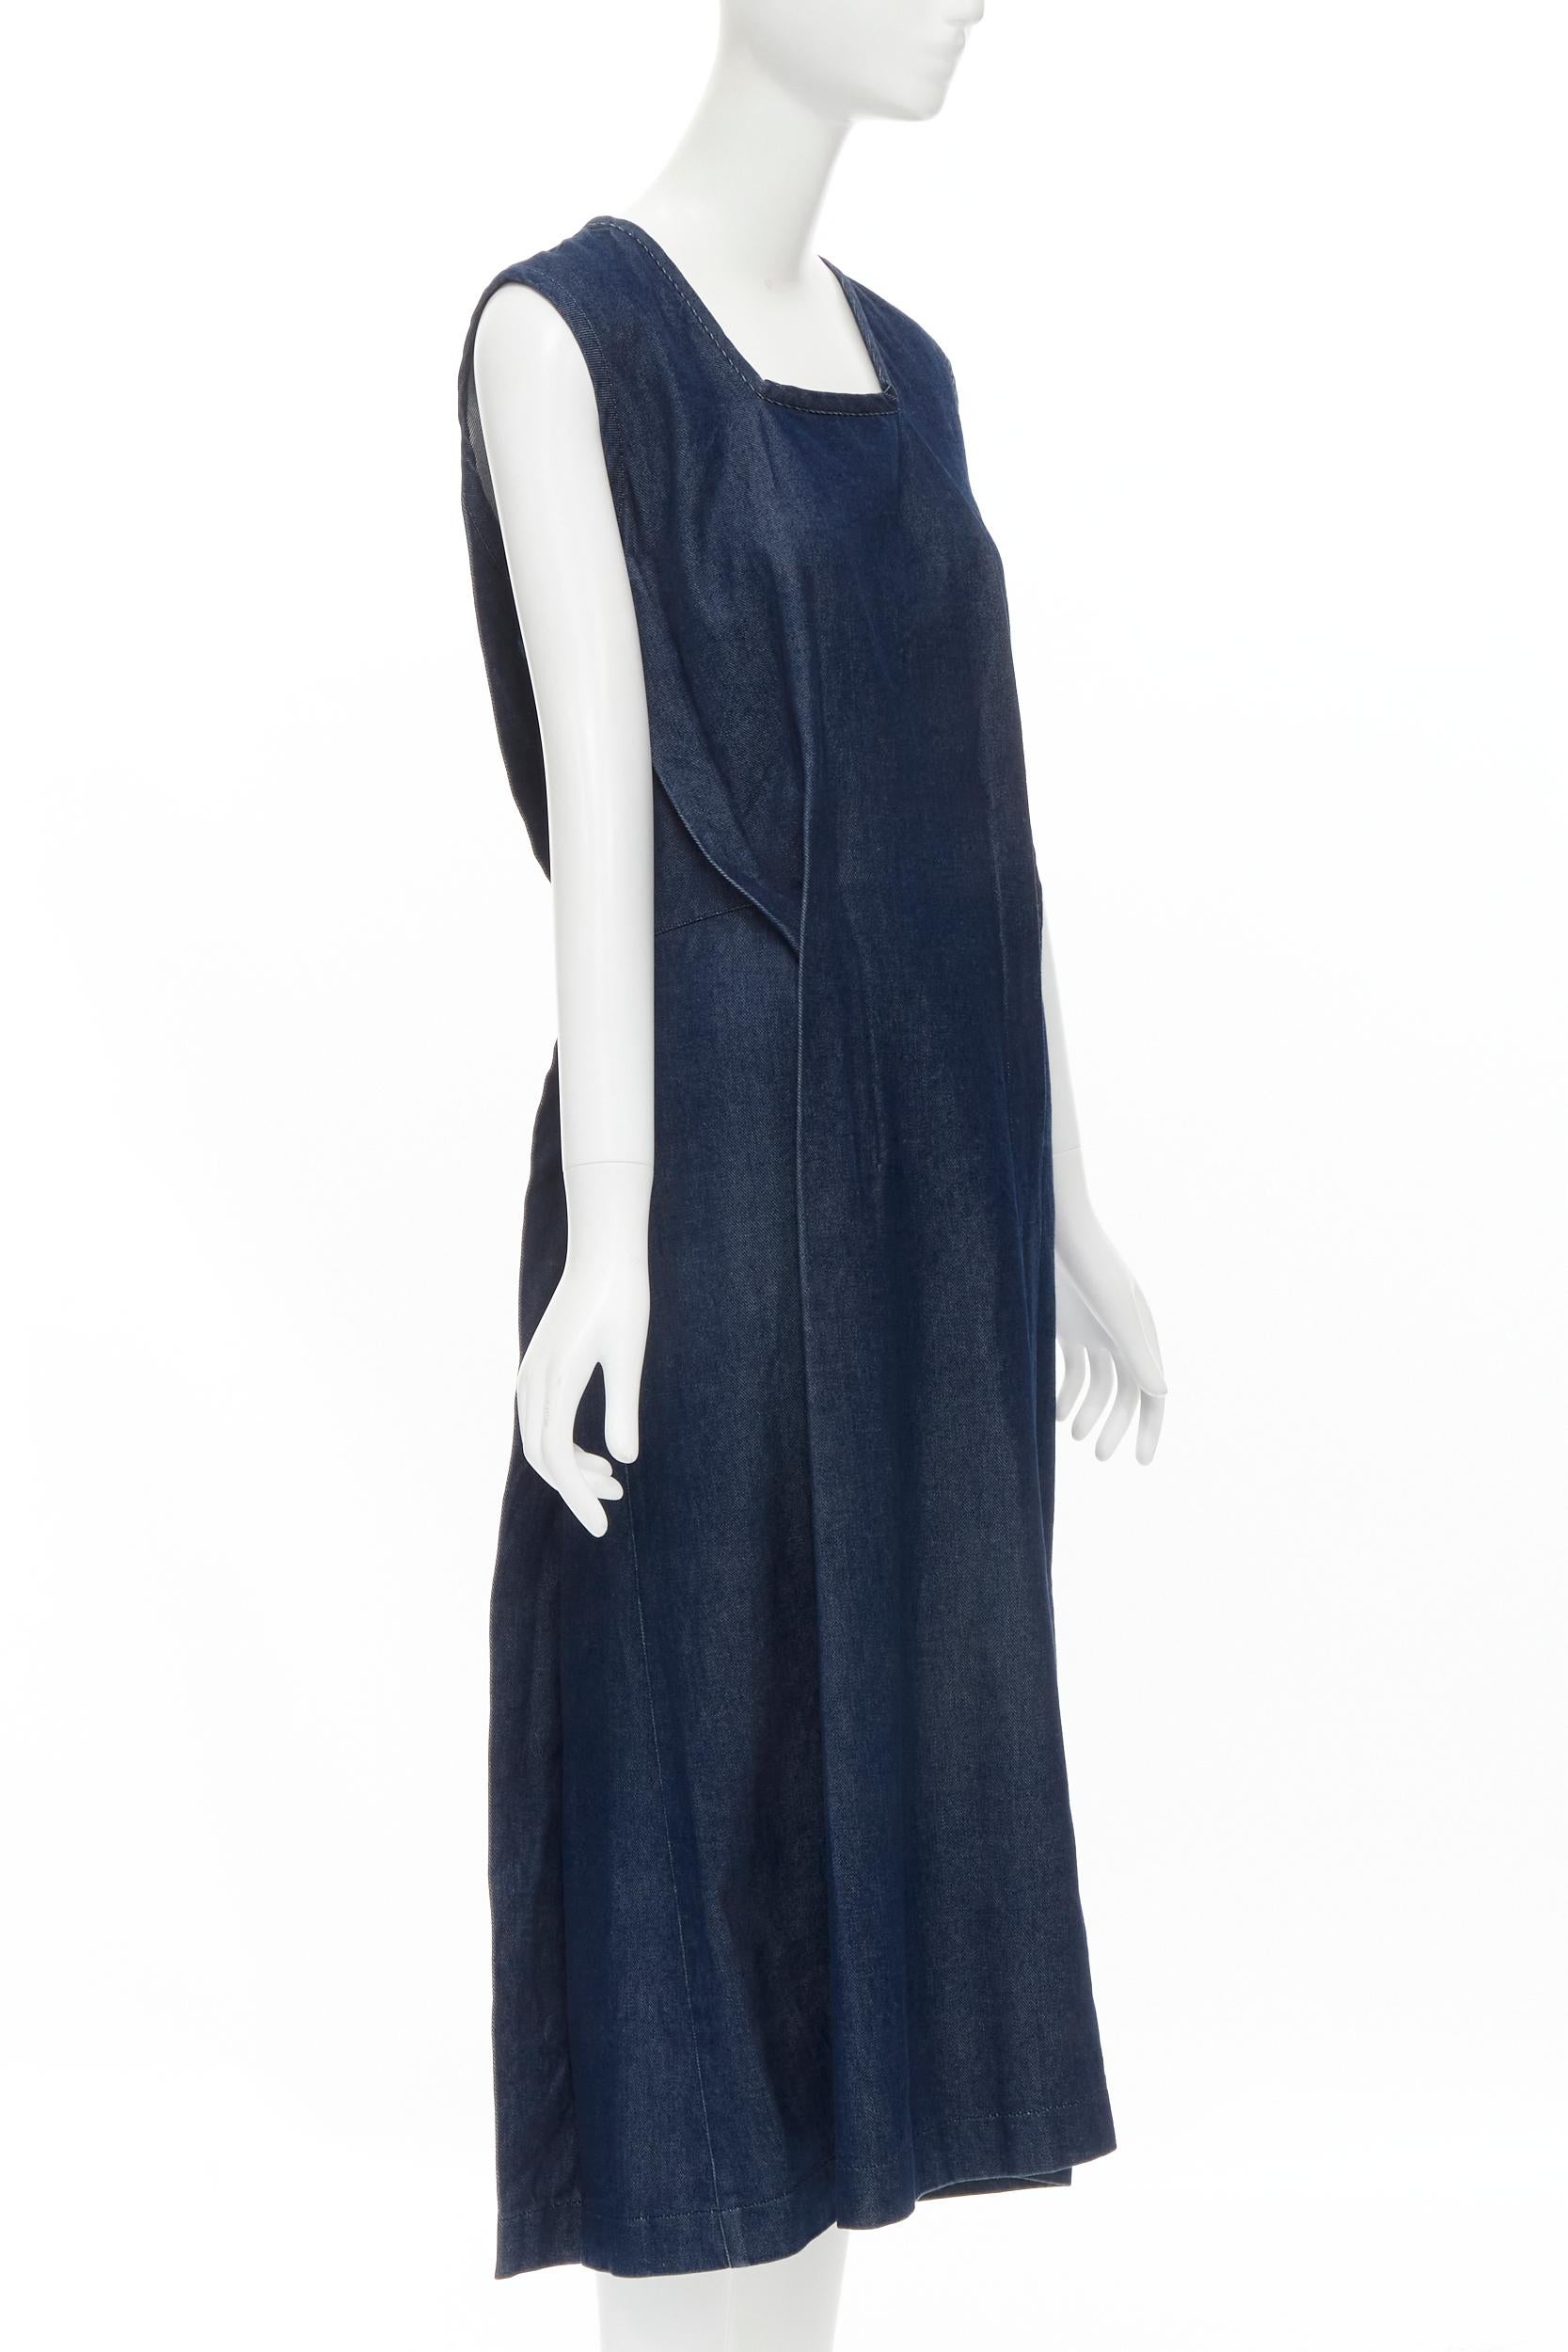 Blue COMME DES GARCONS Vintage 1991 indigo blue denim pinched seam dress M For Sale